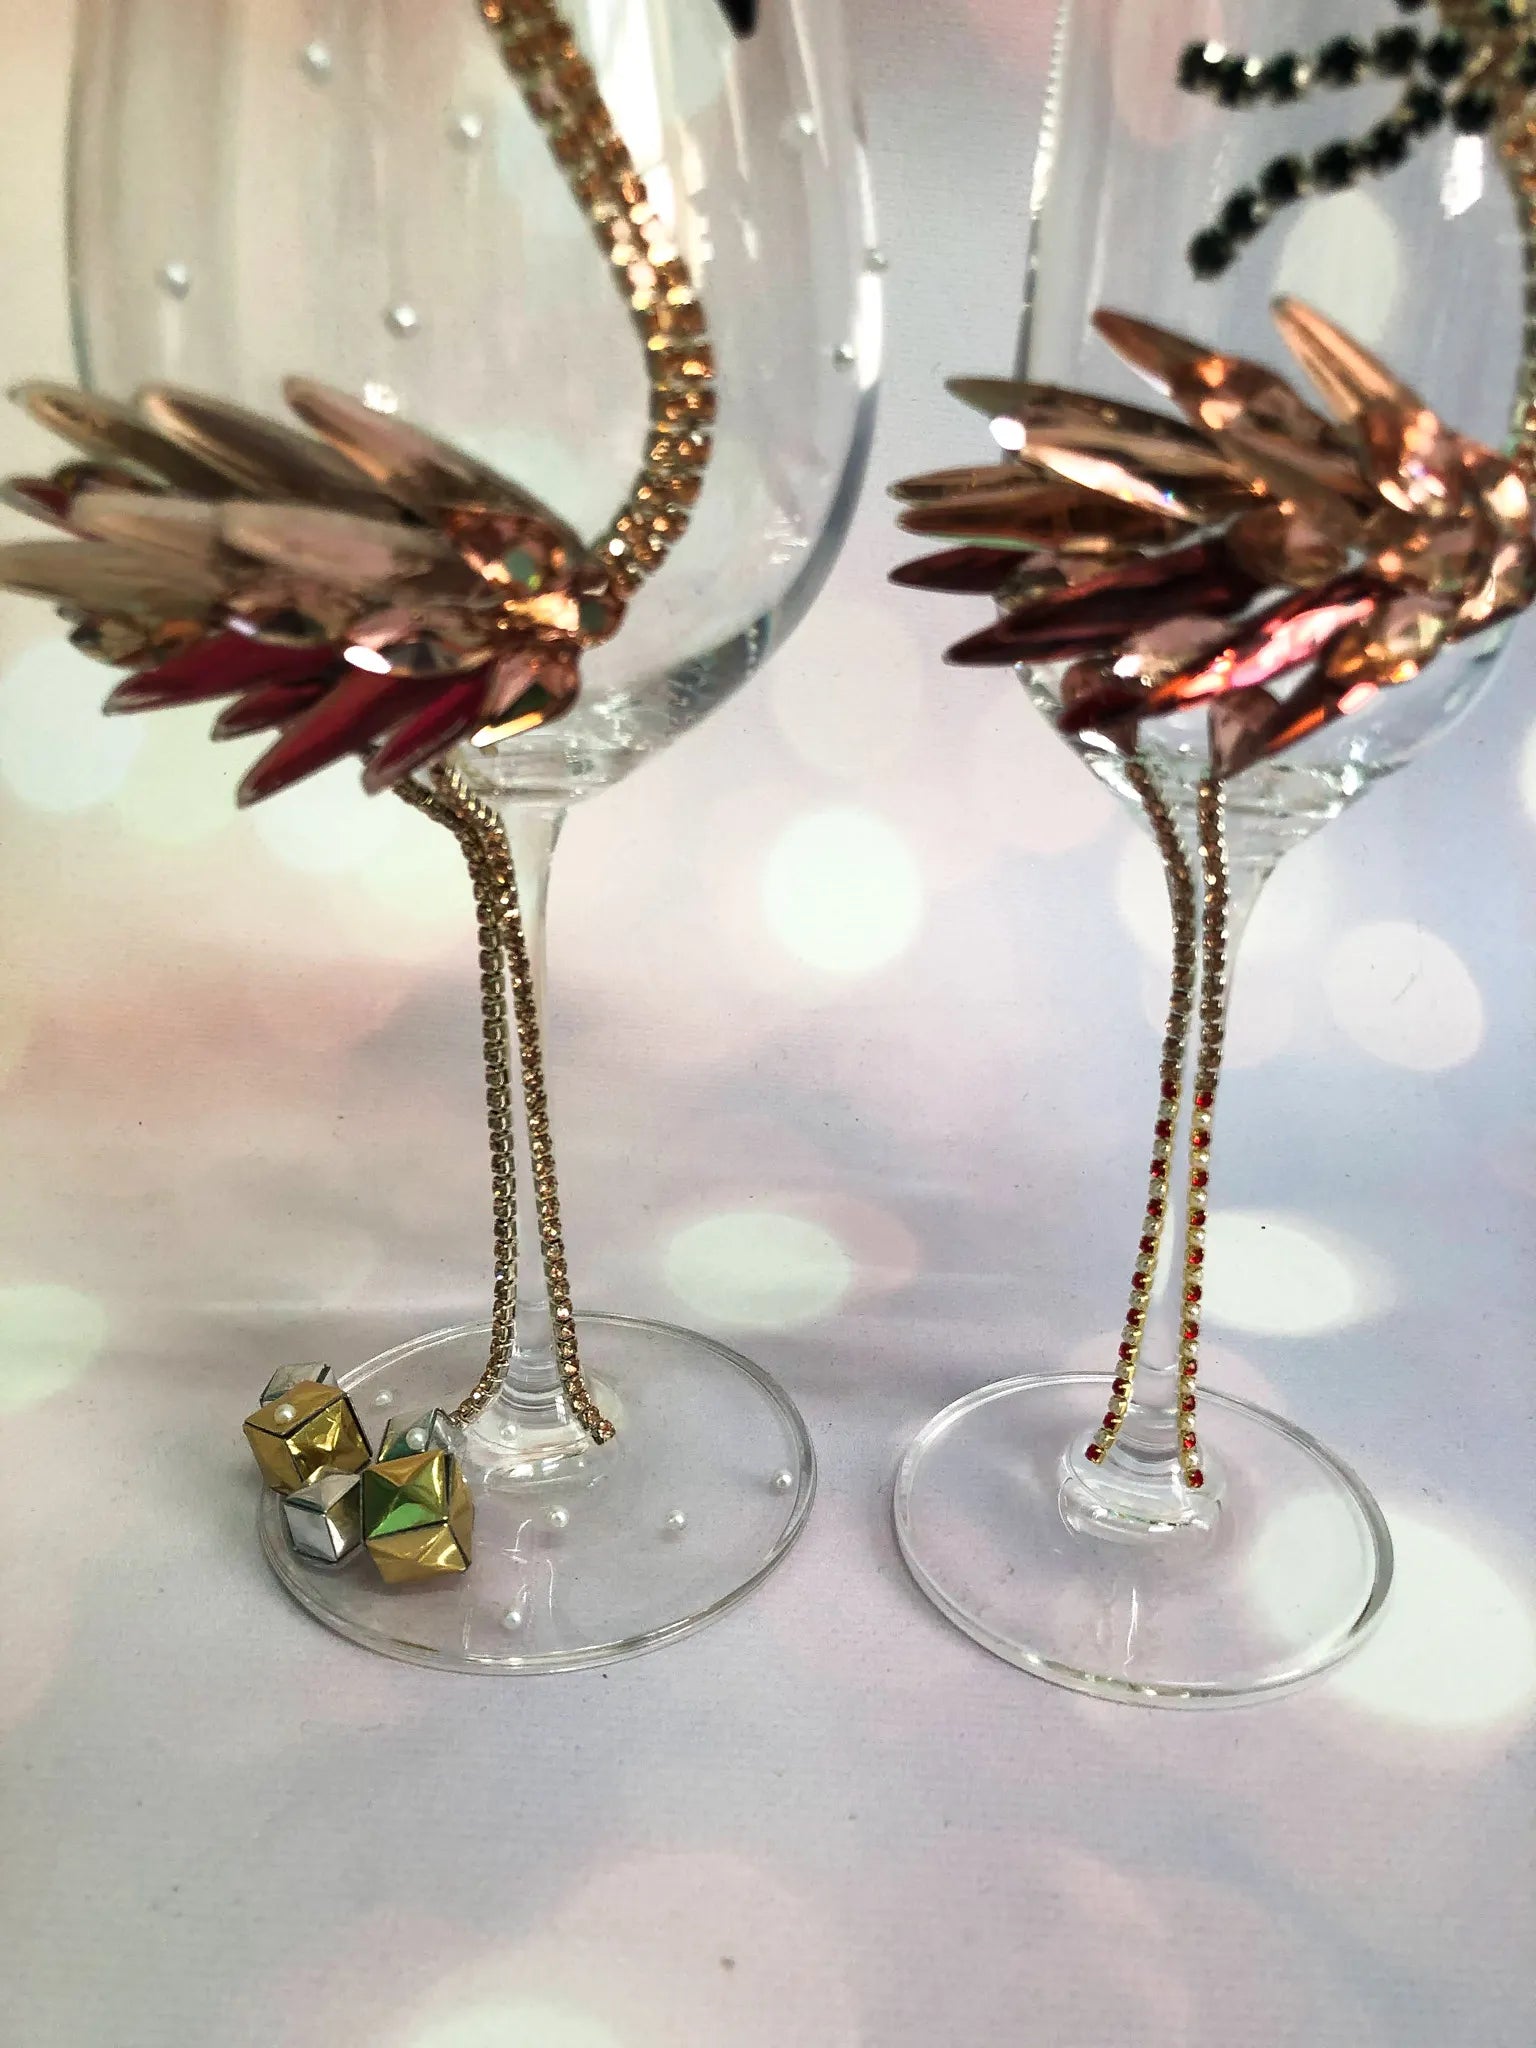 Wine glass with festive flamingo design